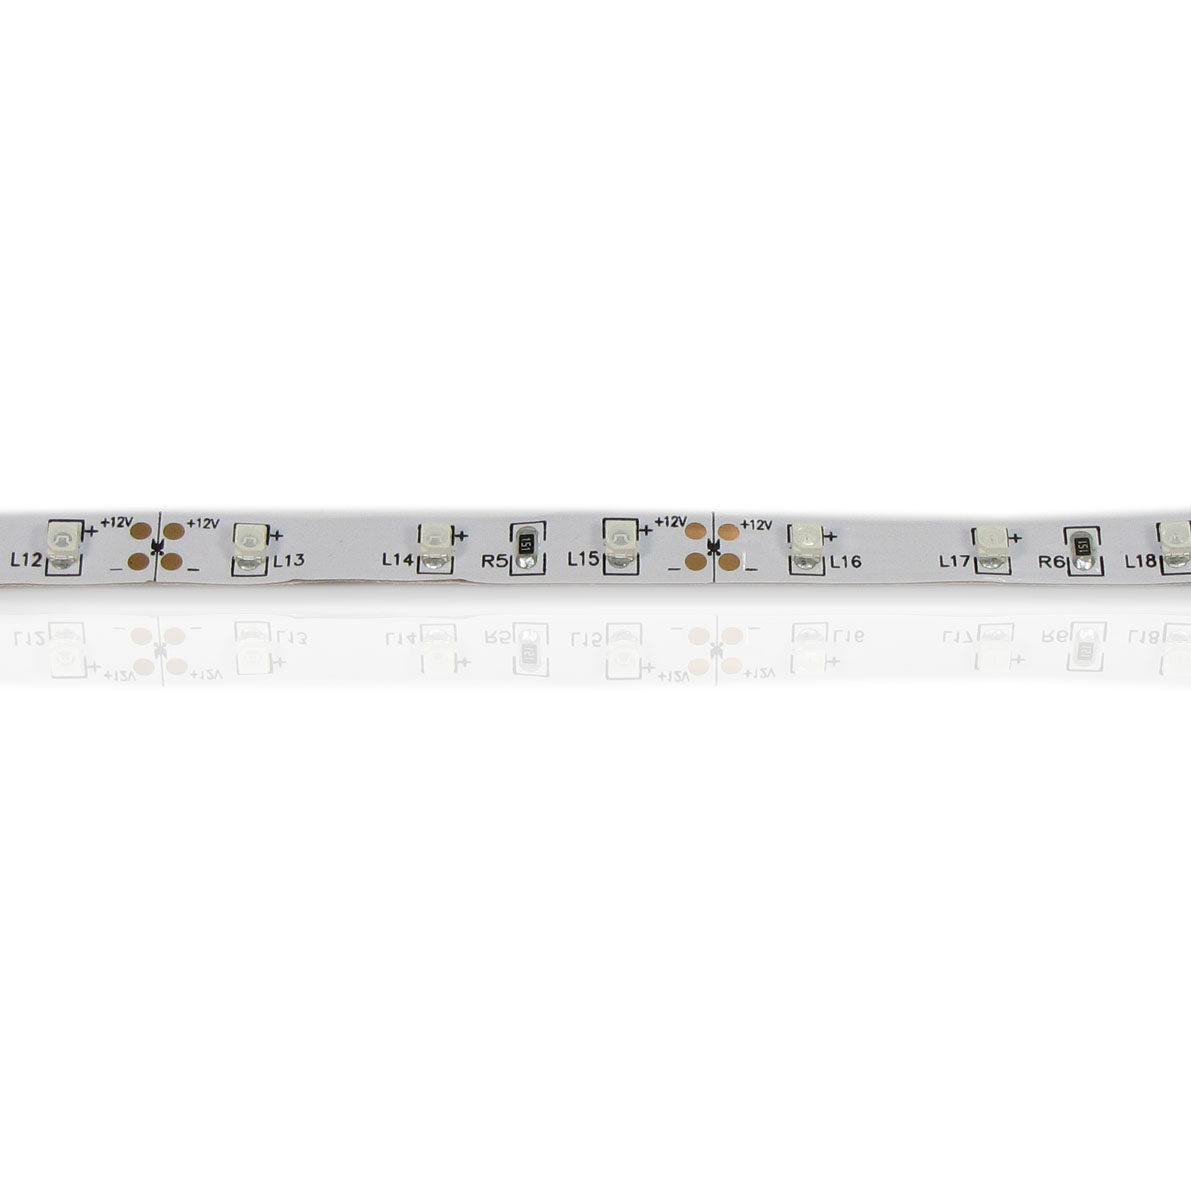 Открытые светодиодные ленты Icled 3528 60 led 12V